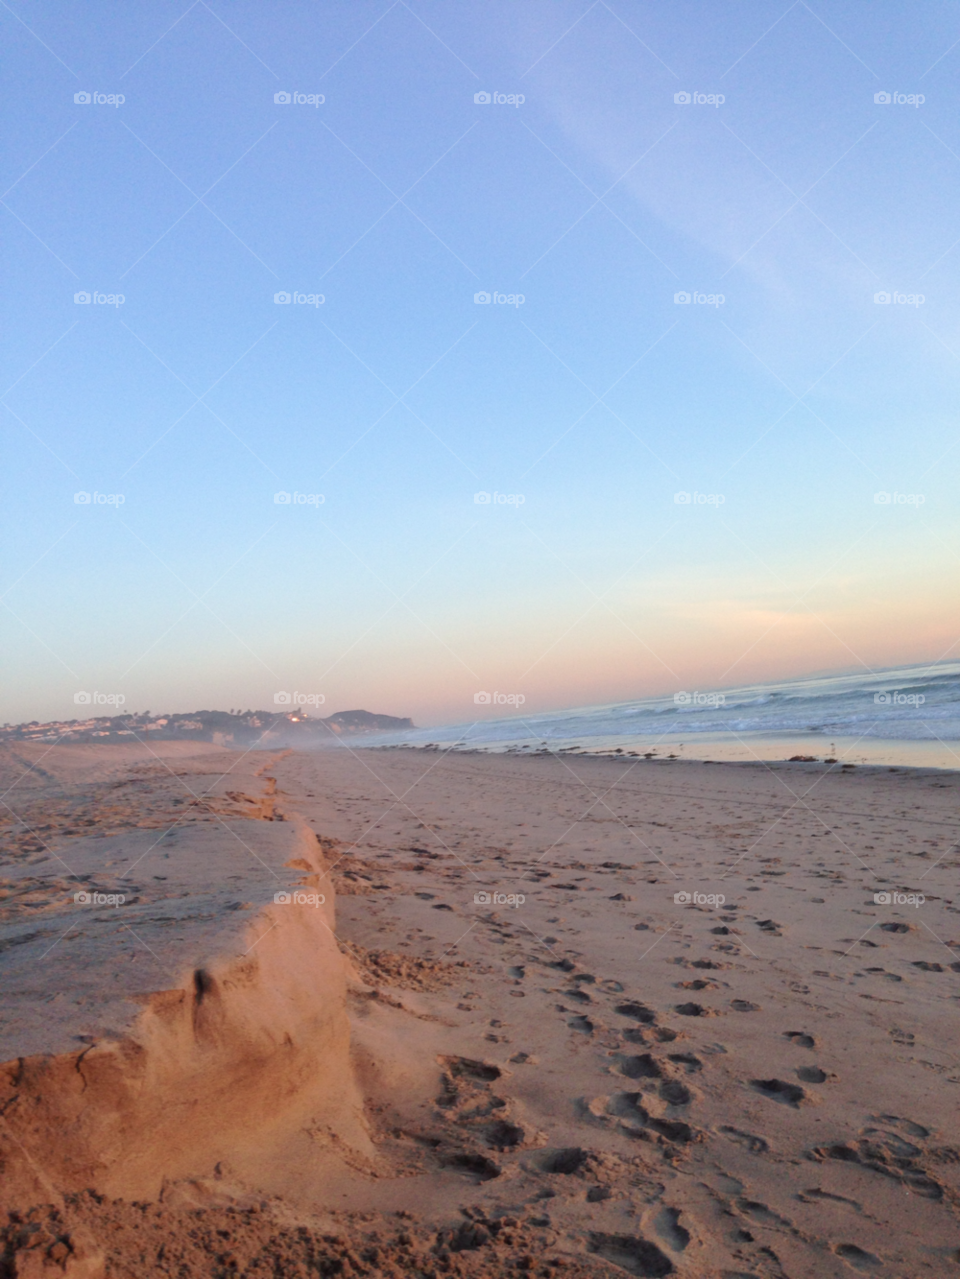 ferris wheel wet sand in between your toes... long walks on the beach zuma beach by katd